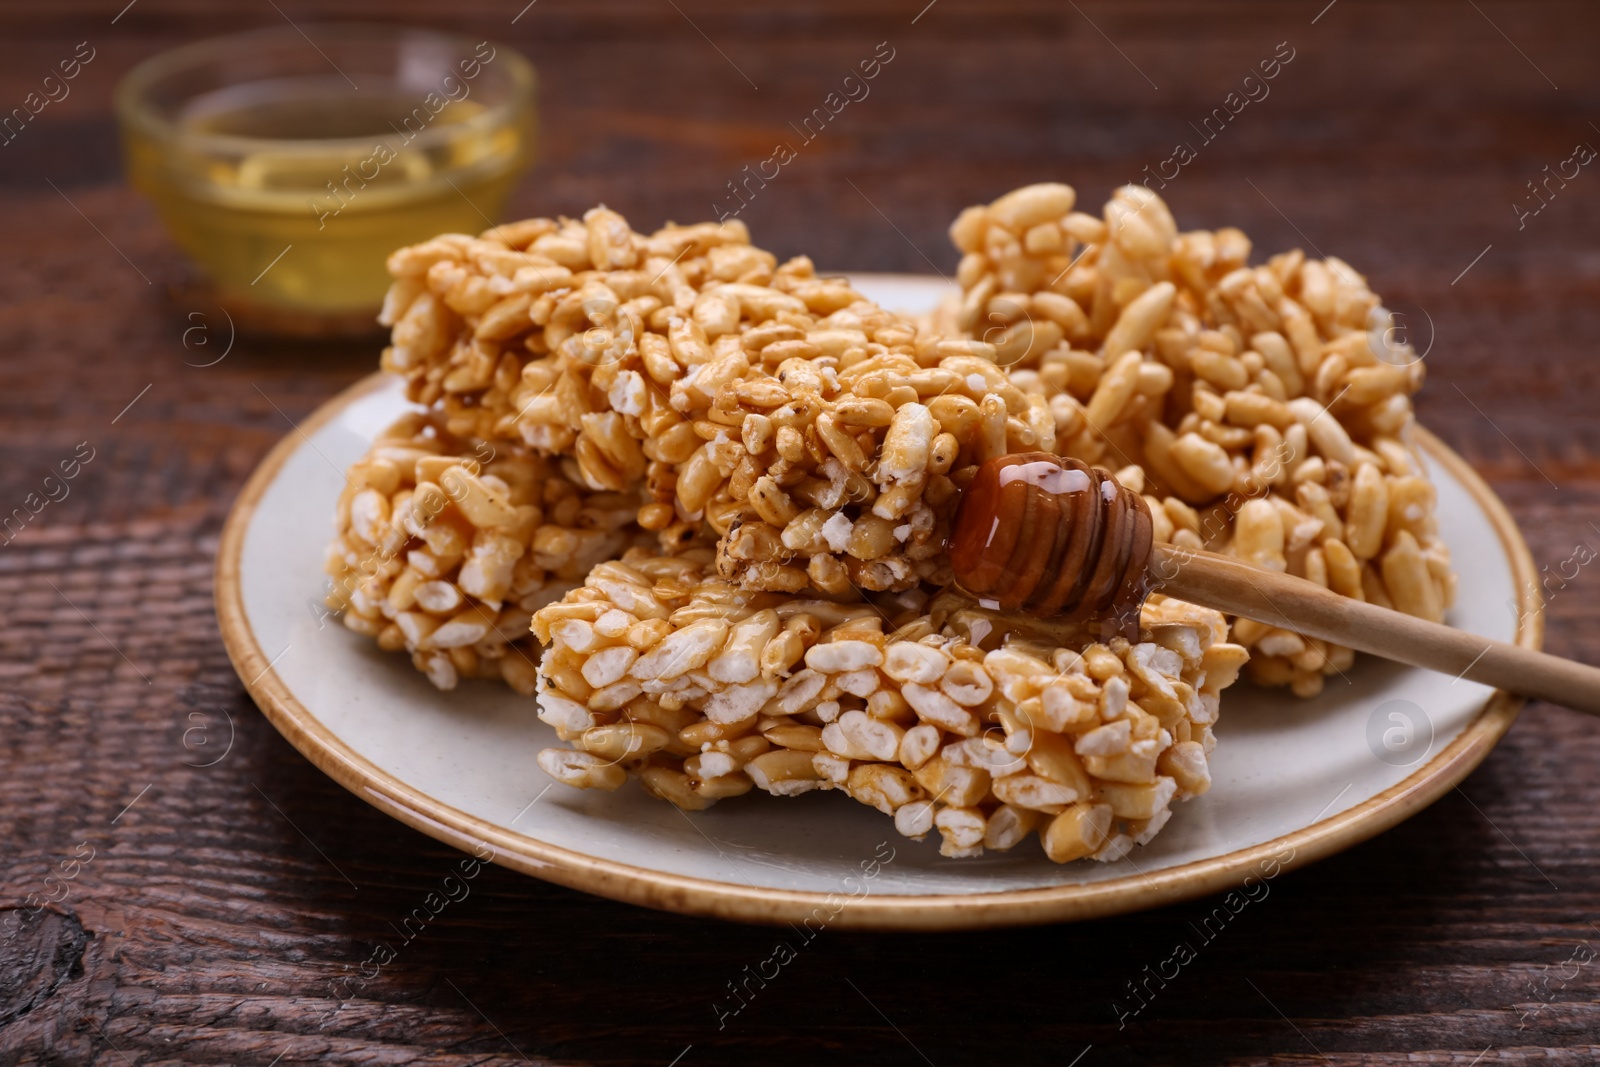 Photo of Plate with puffed rice bars (kozinaki) on wooden table, closeup